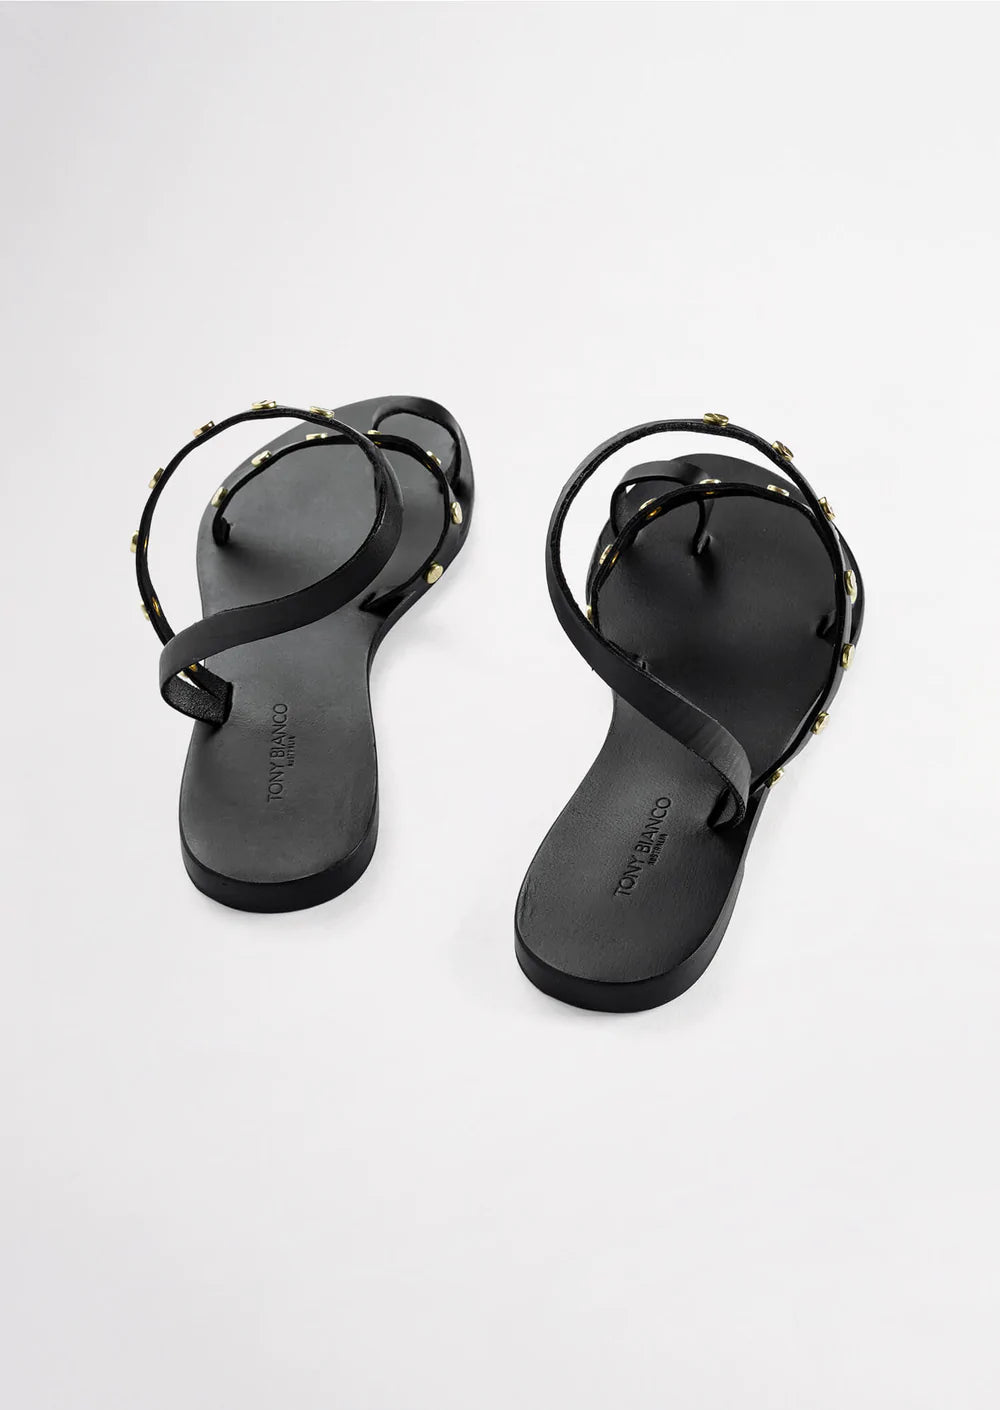 FINOLA STUD SANDAL - TONY BIANCO - 36, 37, 38, 39, 40, 41, BLACK, TAN, womens footwear - Stomp Shoes Darwin